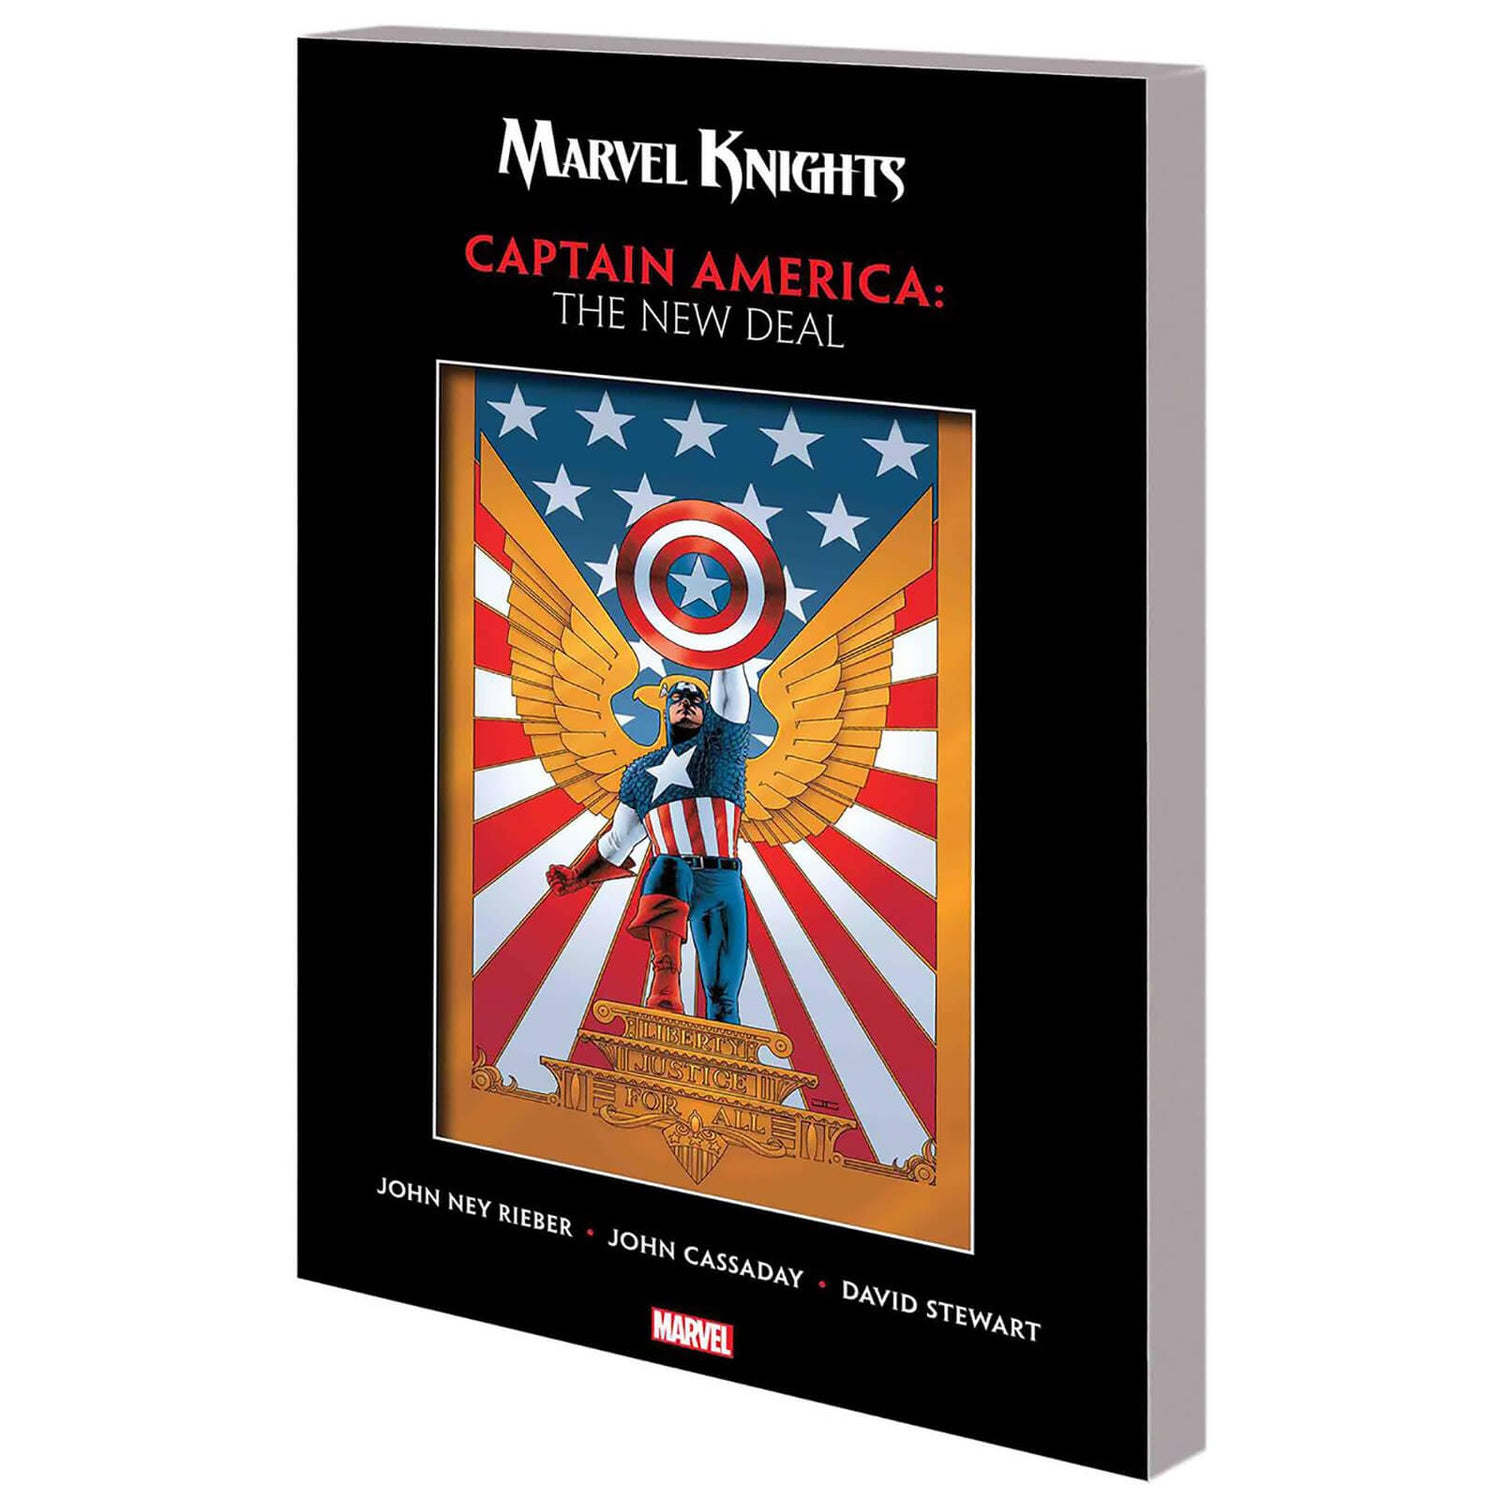 Marvel Comics Marvel Knights Captain America Rieber Cassaday Trade Paperback New Deal Graphic Novel